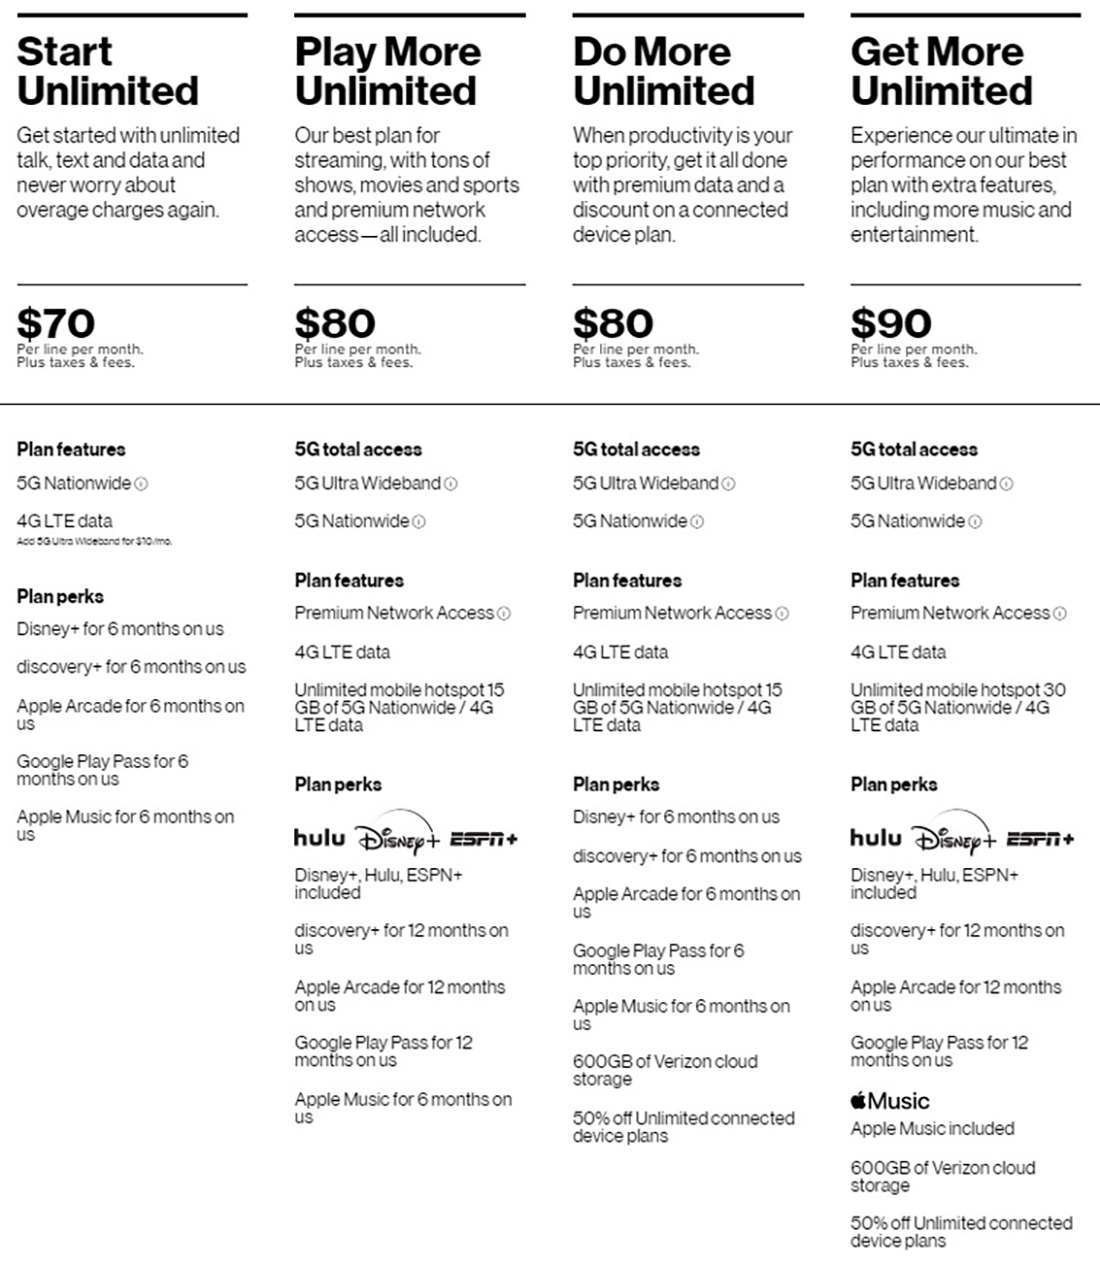 www.verizon.com plans unlimited - Verizon Play More Unlimited